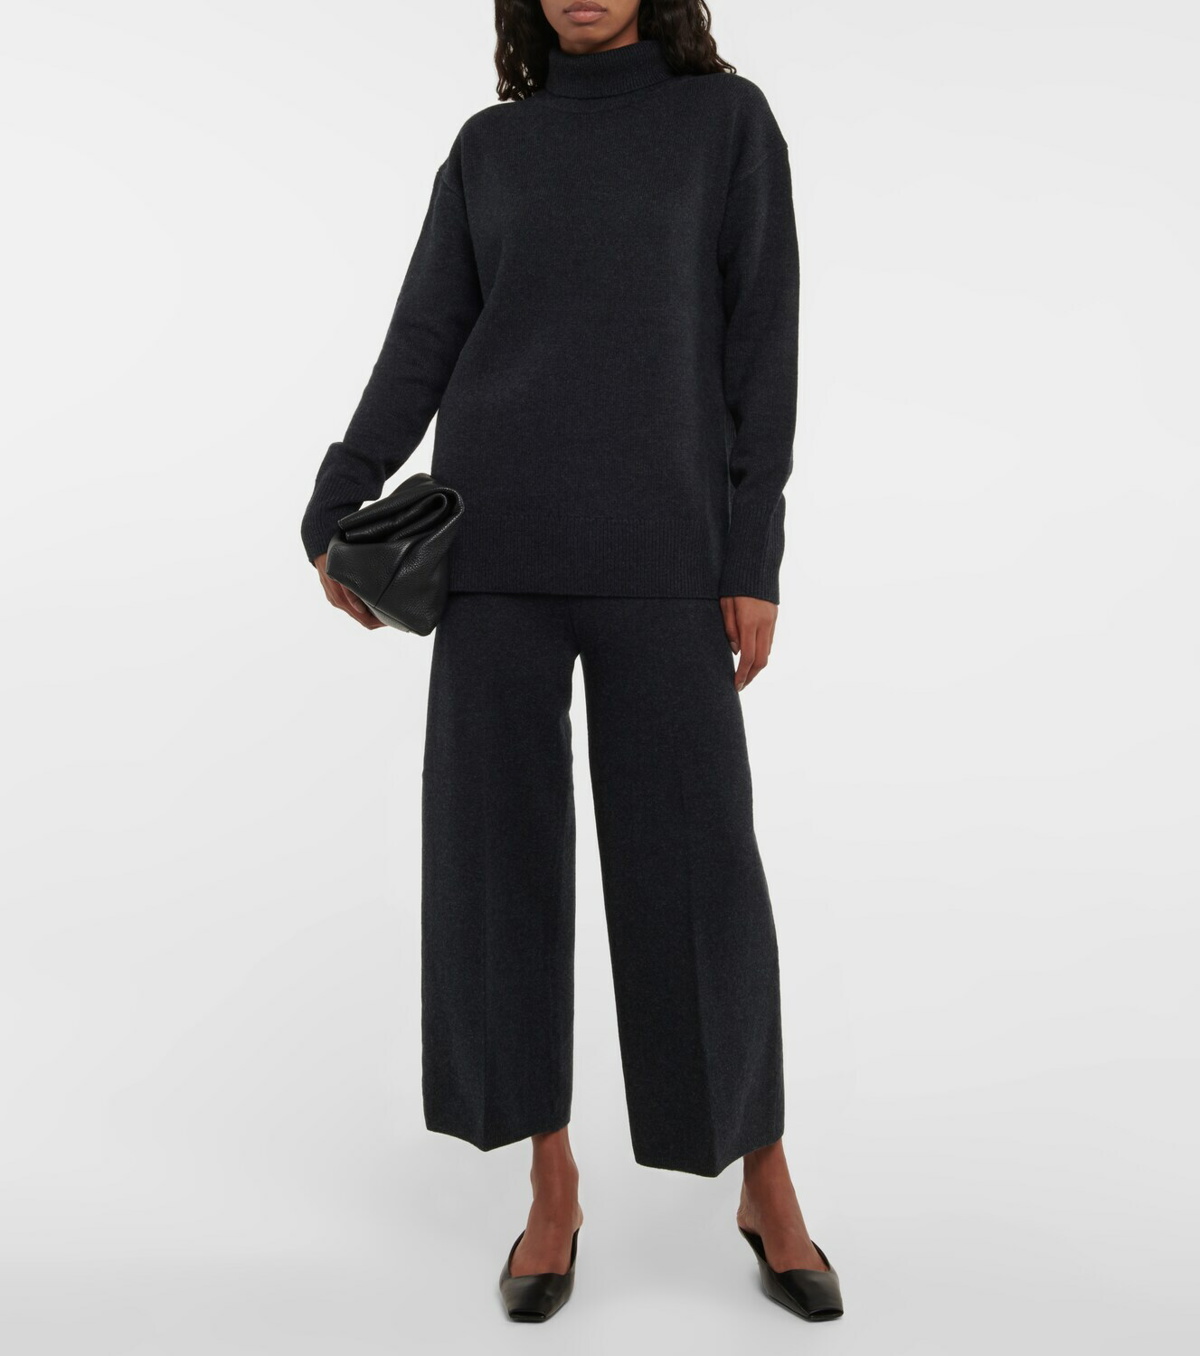 Wool-blend knit flared pants in black - Joseph